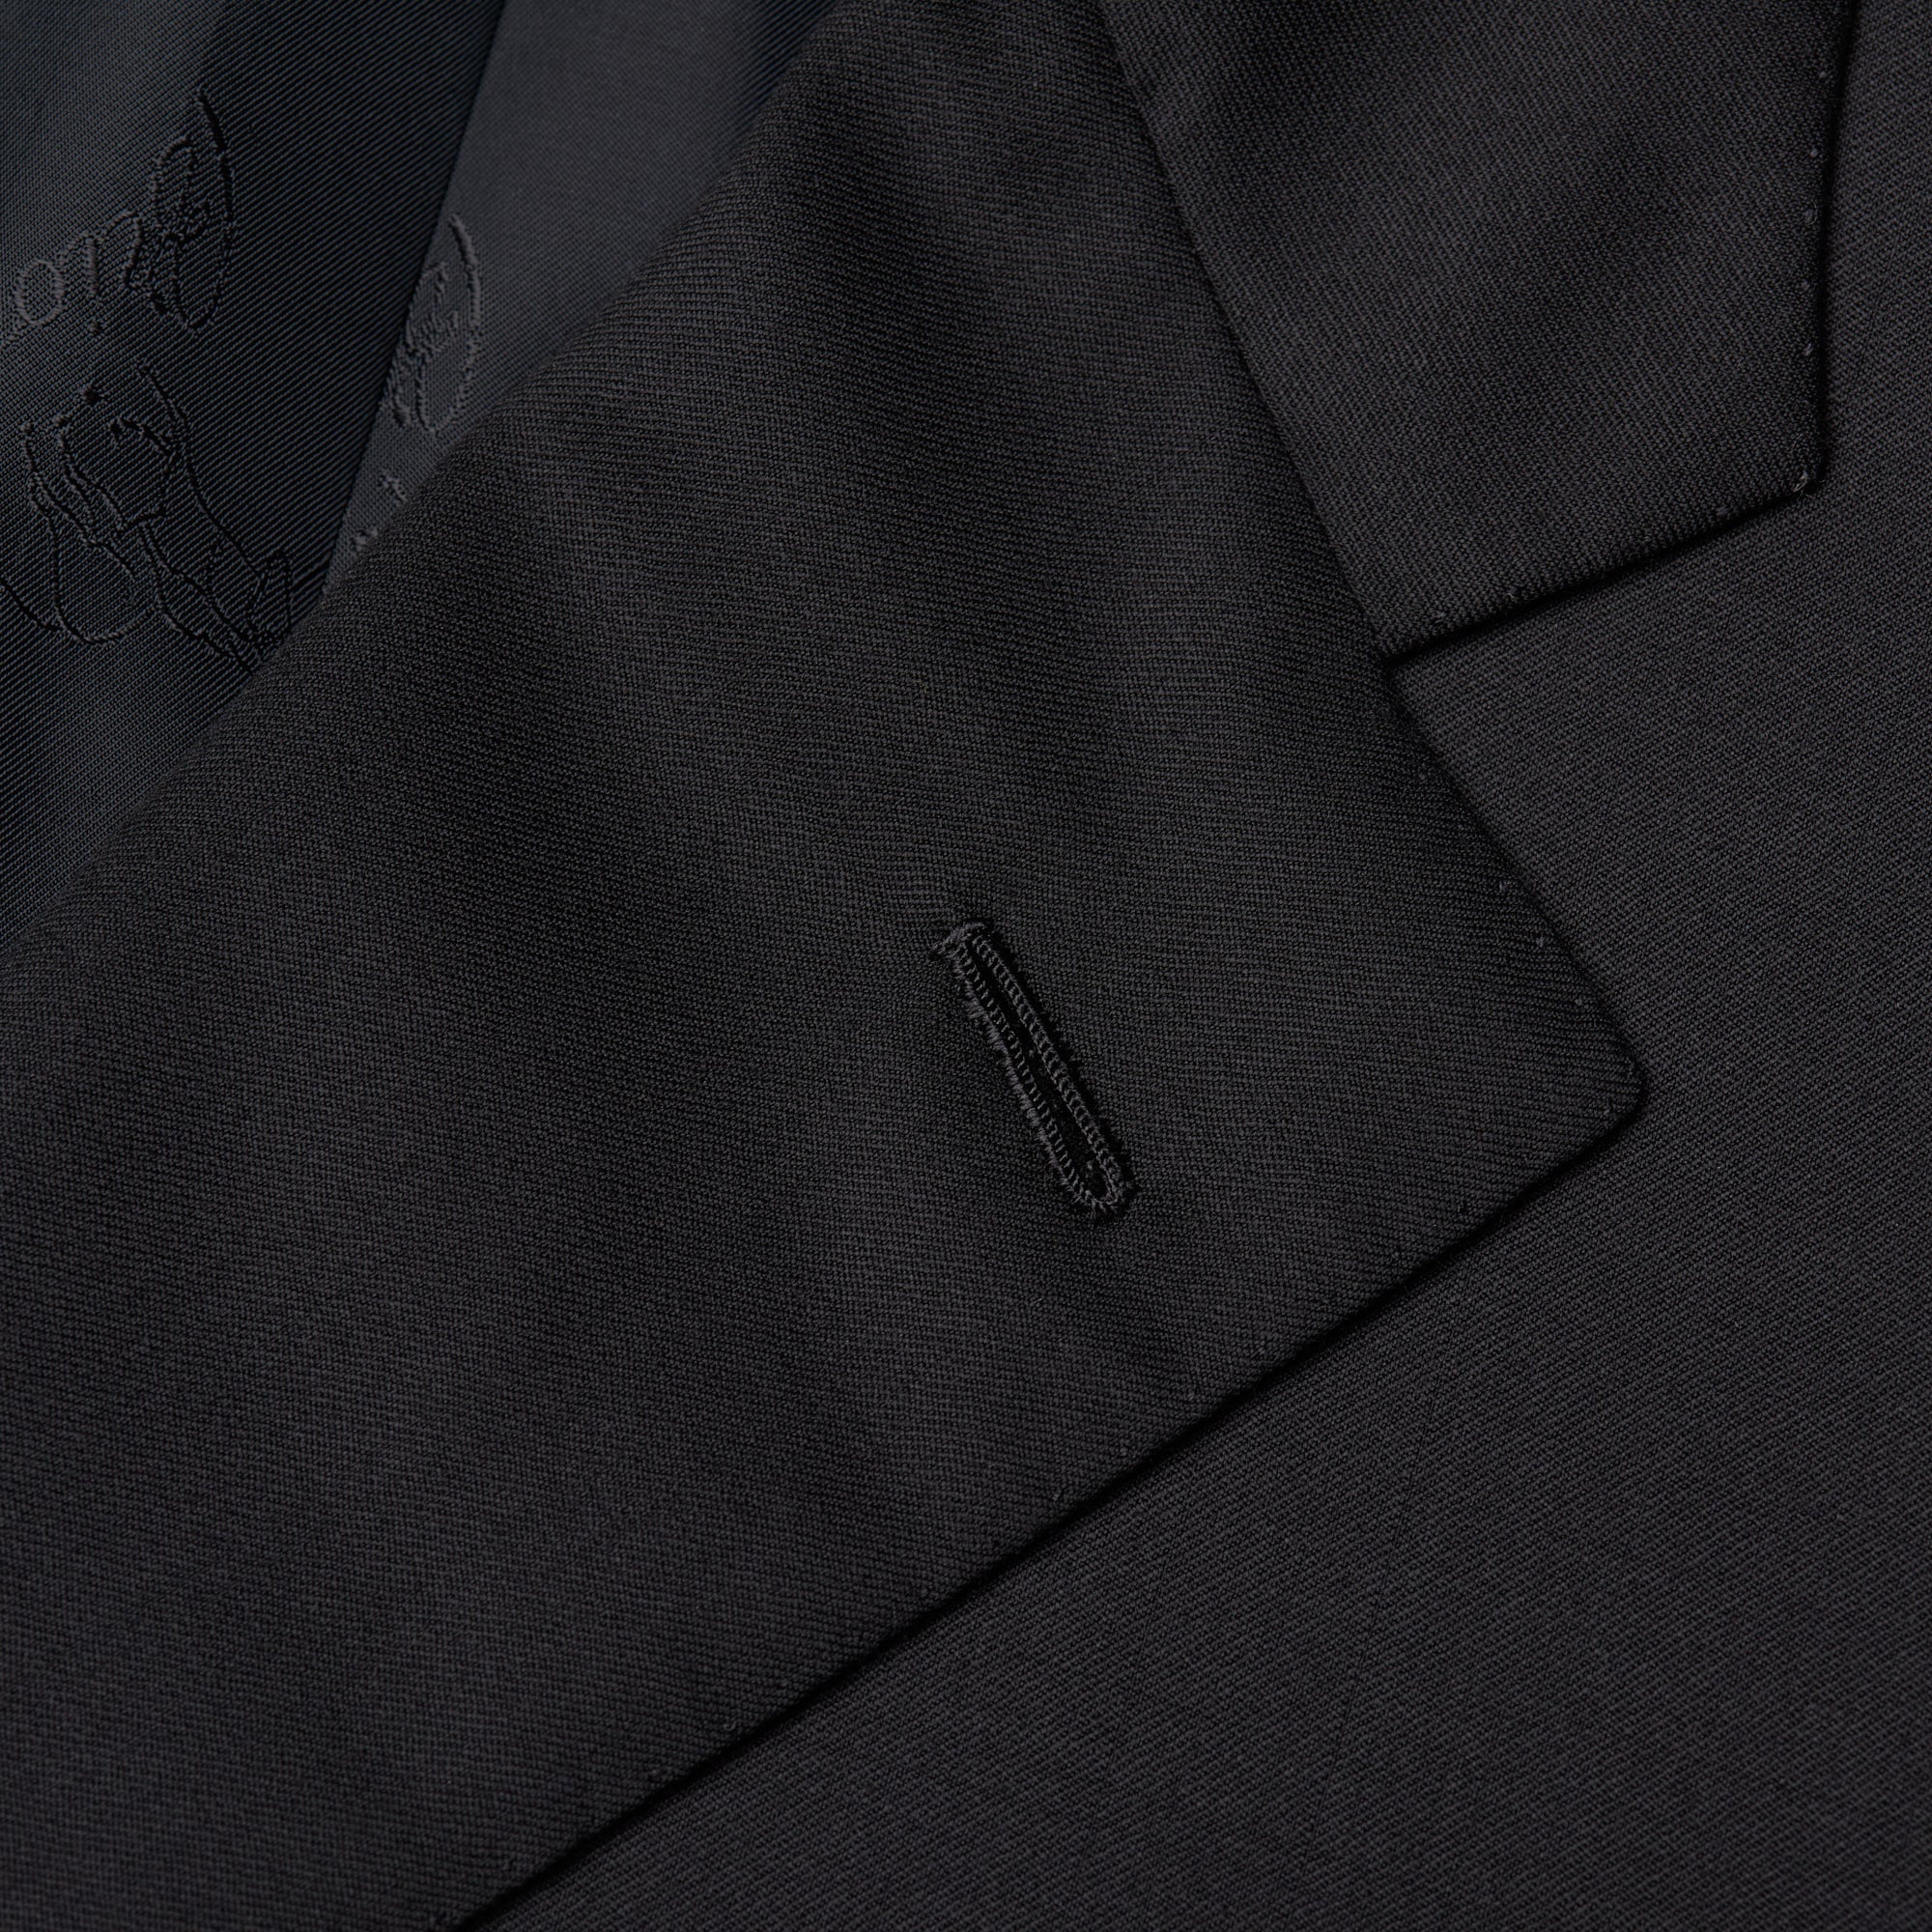 BRIONI "CHIGI" Handmade Black Wool Luxury Suit NEW BRIONI